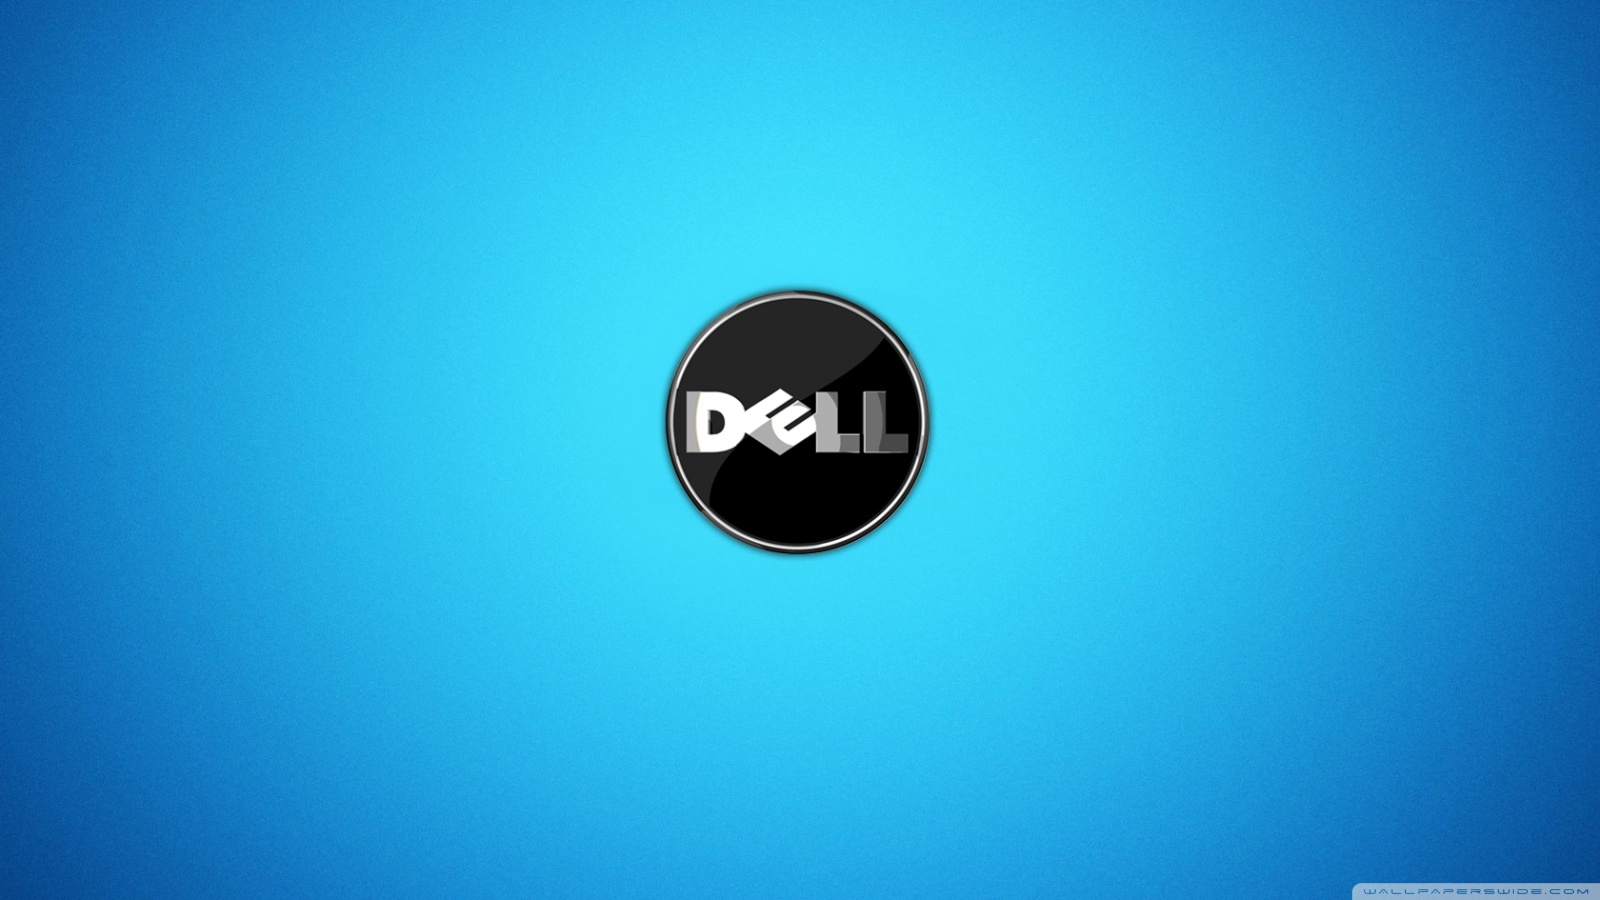 Dell By Aj Ultra Hd Desktop Background Wallpaper For 4k Uhd Tv Tablet Smartphone